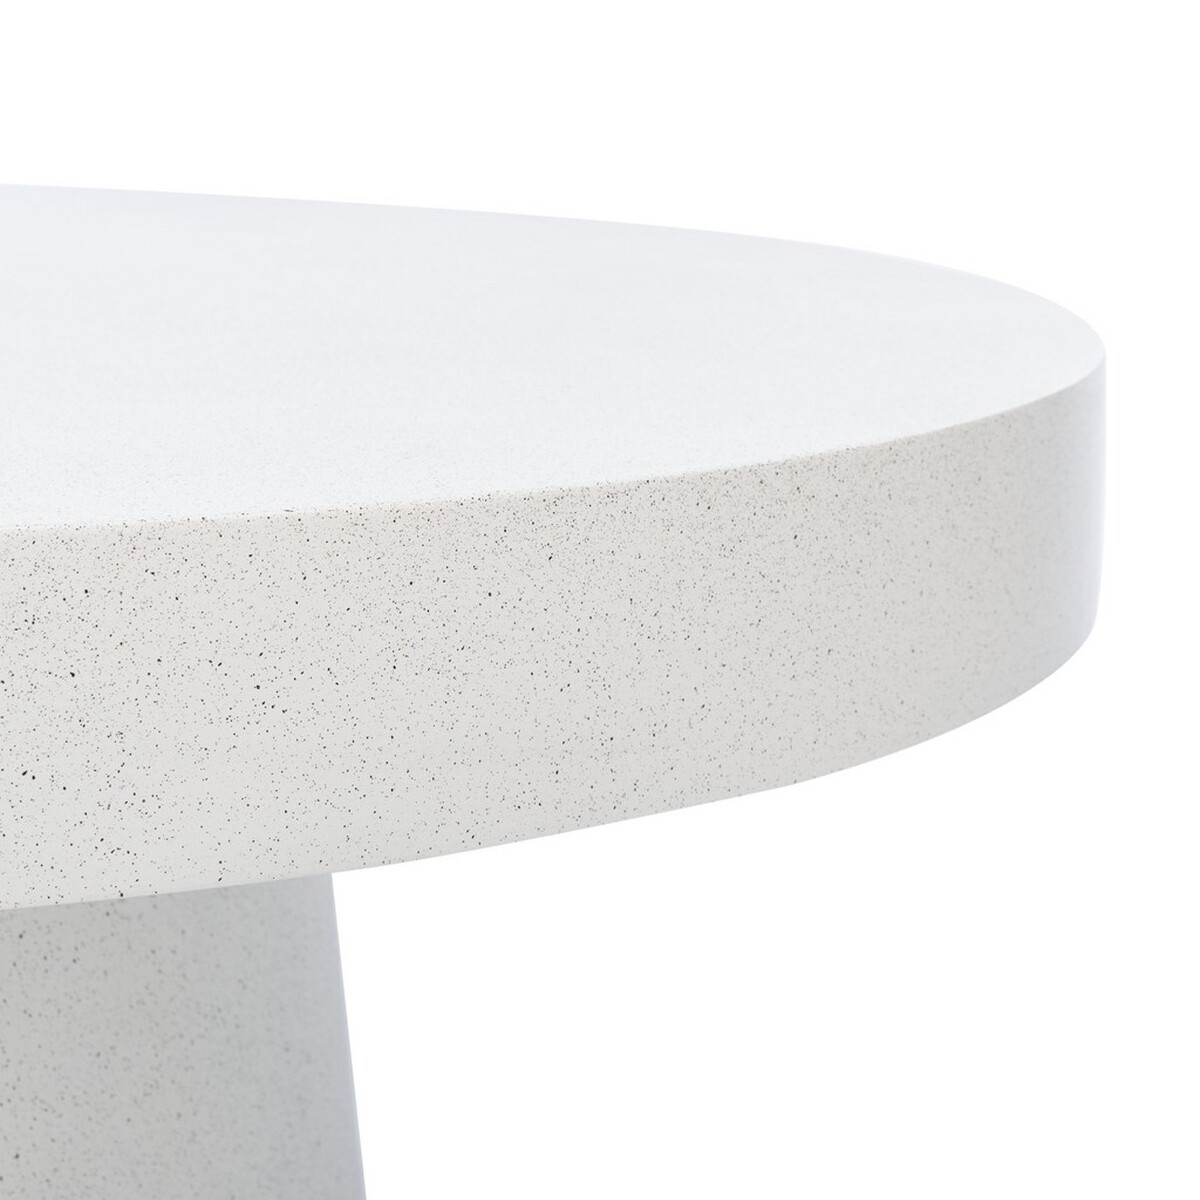 Jaria Paper Mache Coffee Table - Image 3